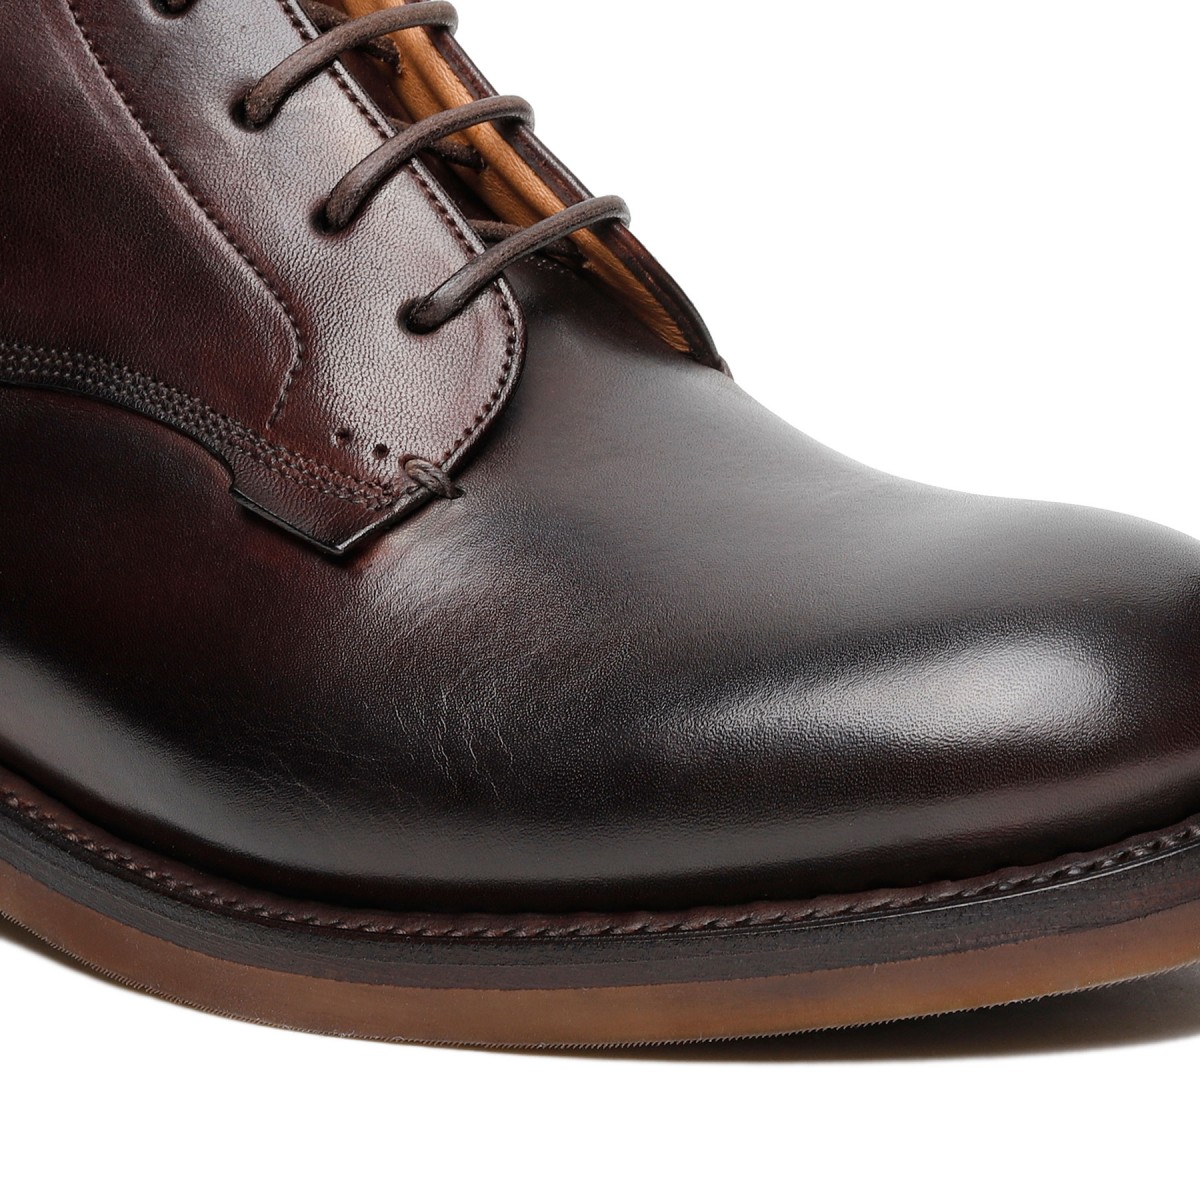 Courmayeur dark brown leather booties